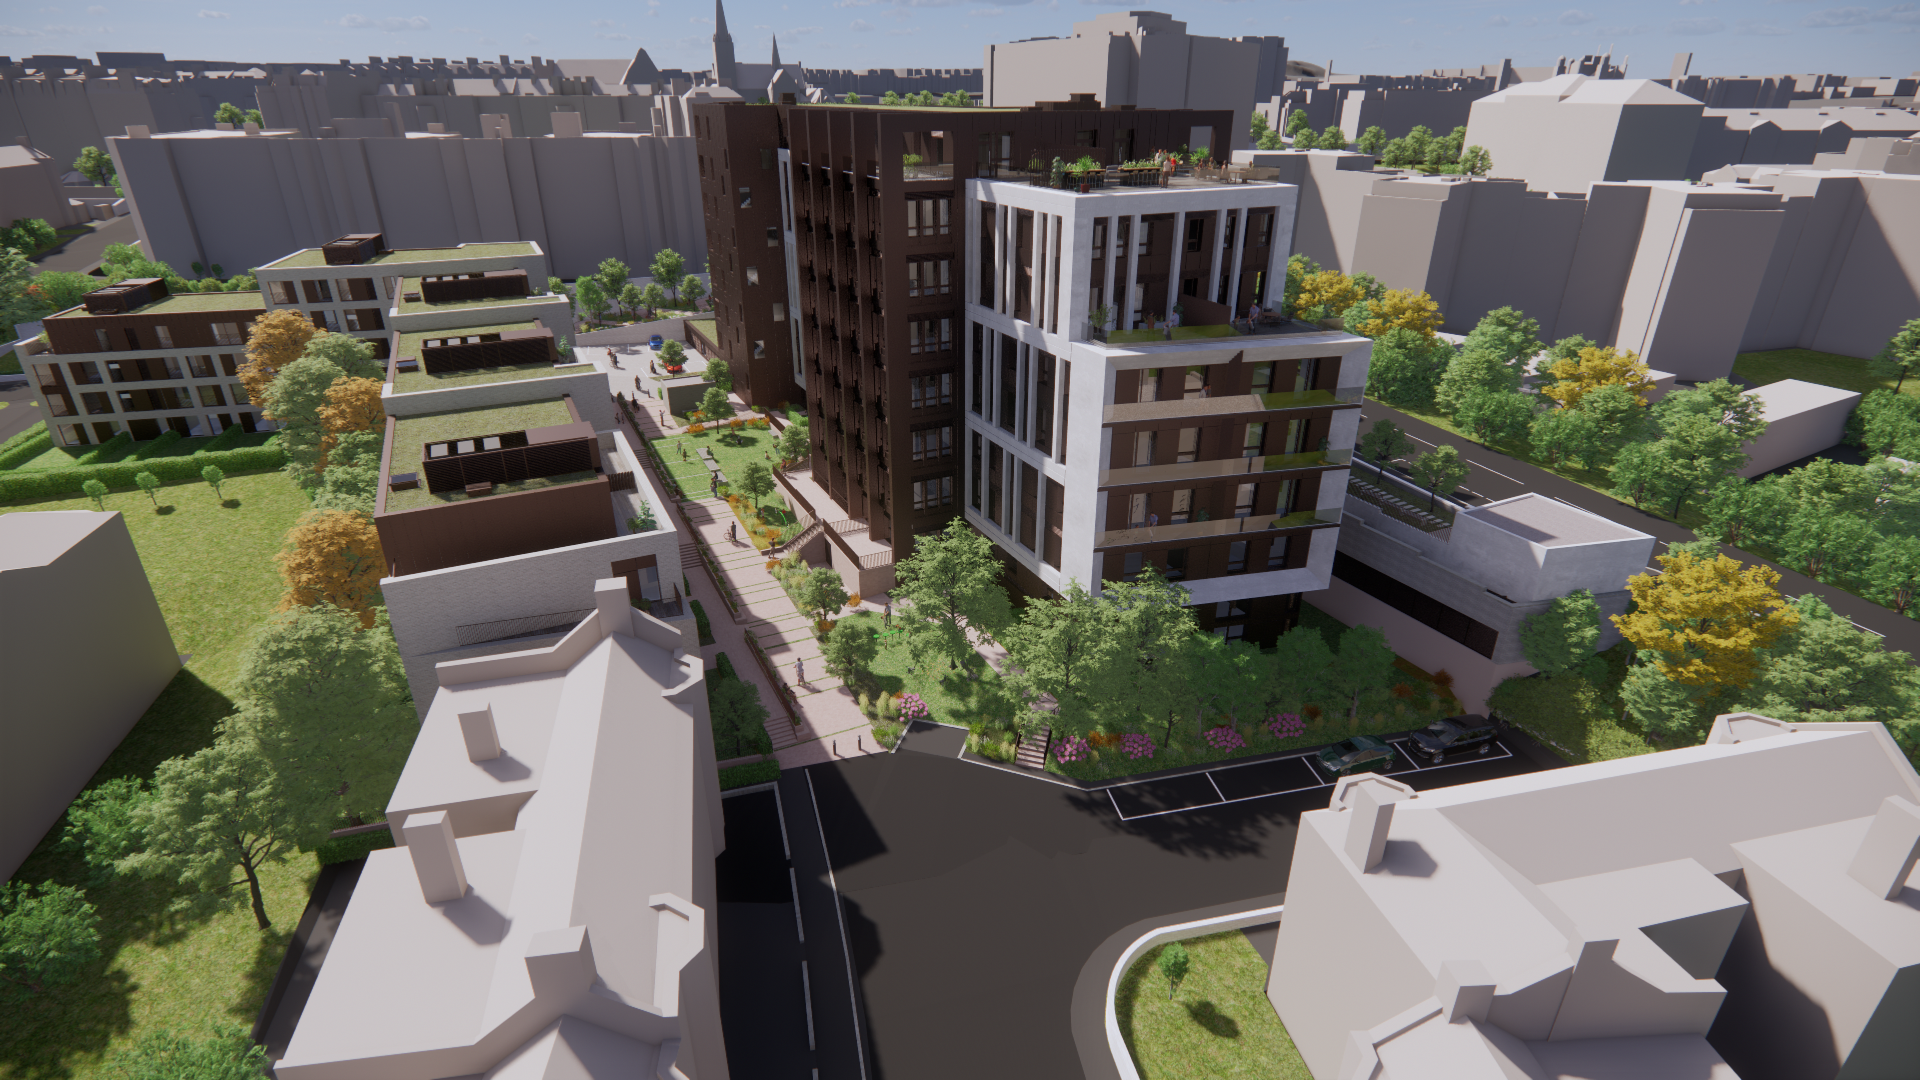 Net-zero capable residential development in Edinburgh comes to market